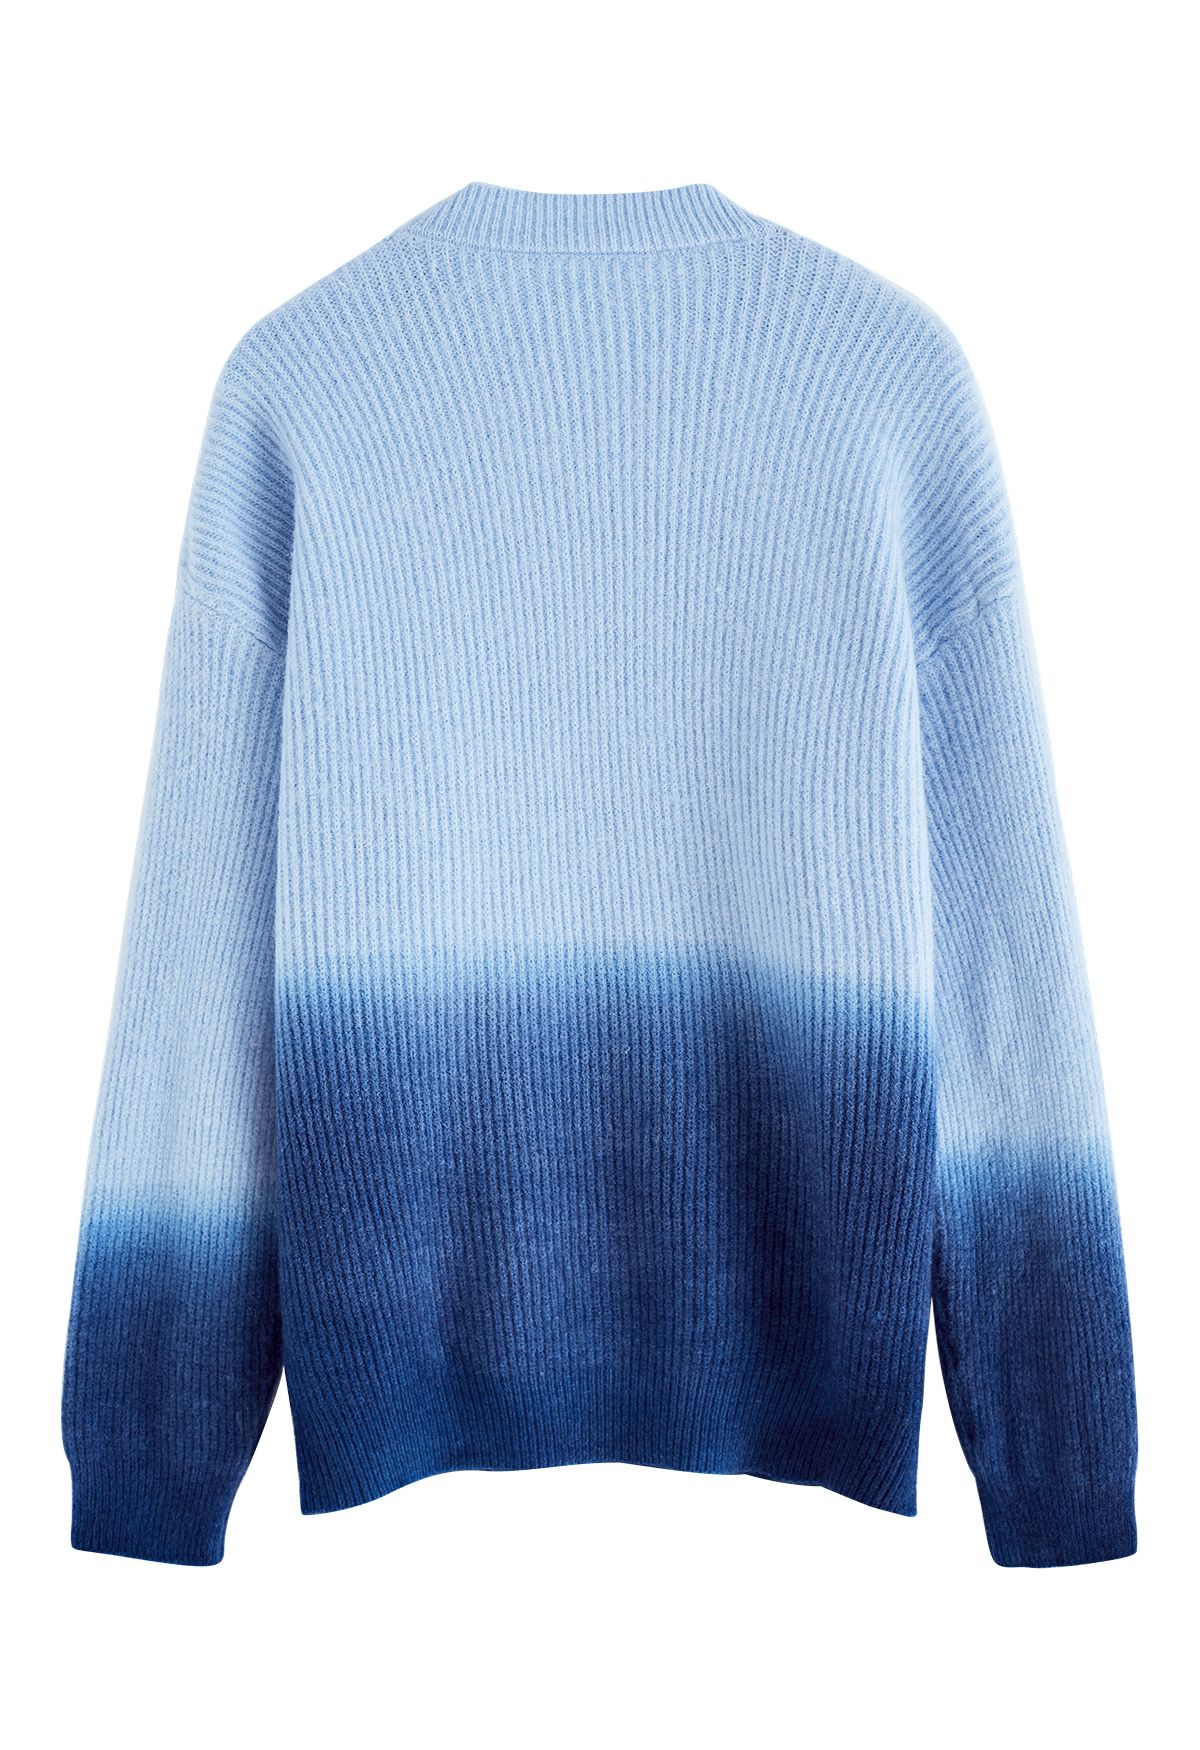 Ombre Round Neck Rib Knit Sweater in Blue - Retro, Indie and Unique Fashion